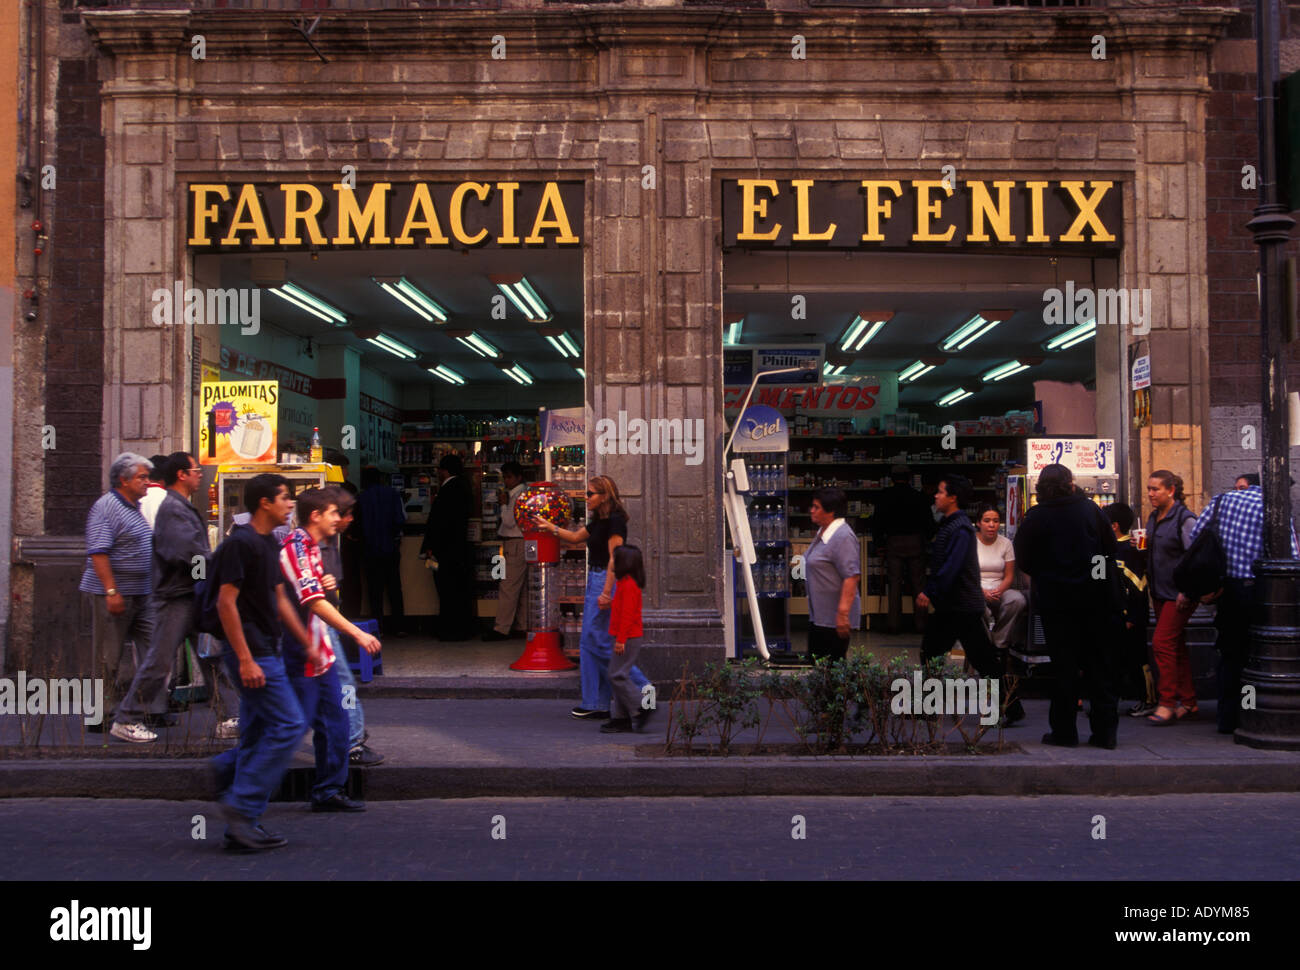 Mexican people, Farmacia el Fenix, pharmacy, drugstore, farmacia, Calle Francisco I Madero, Mexico City, Federal District, Mexico Stock Photo